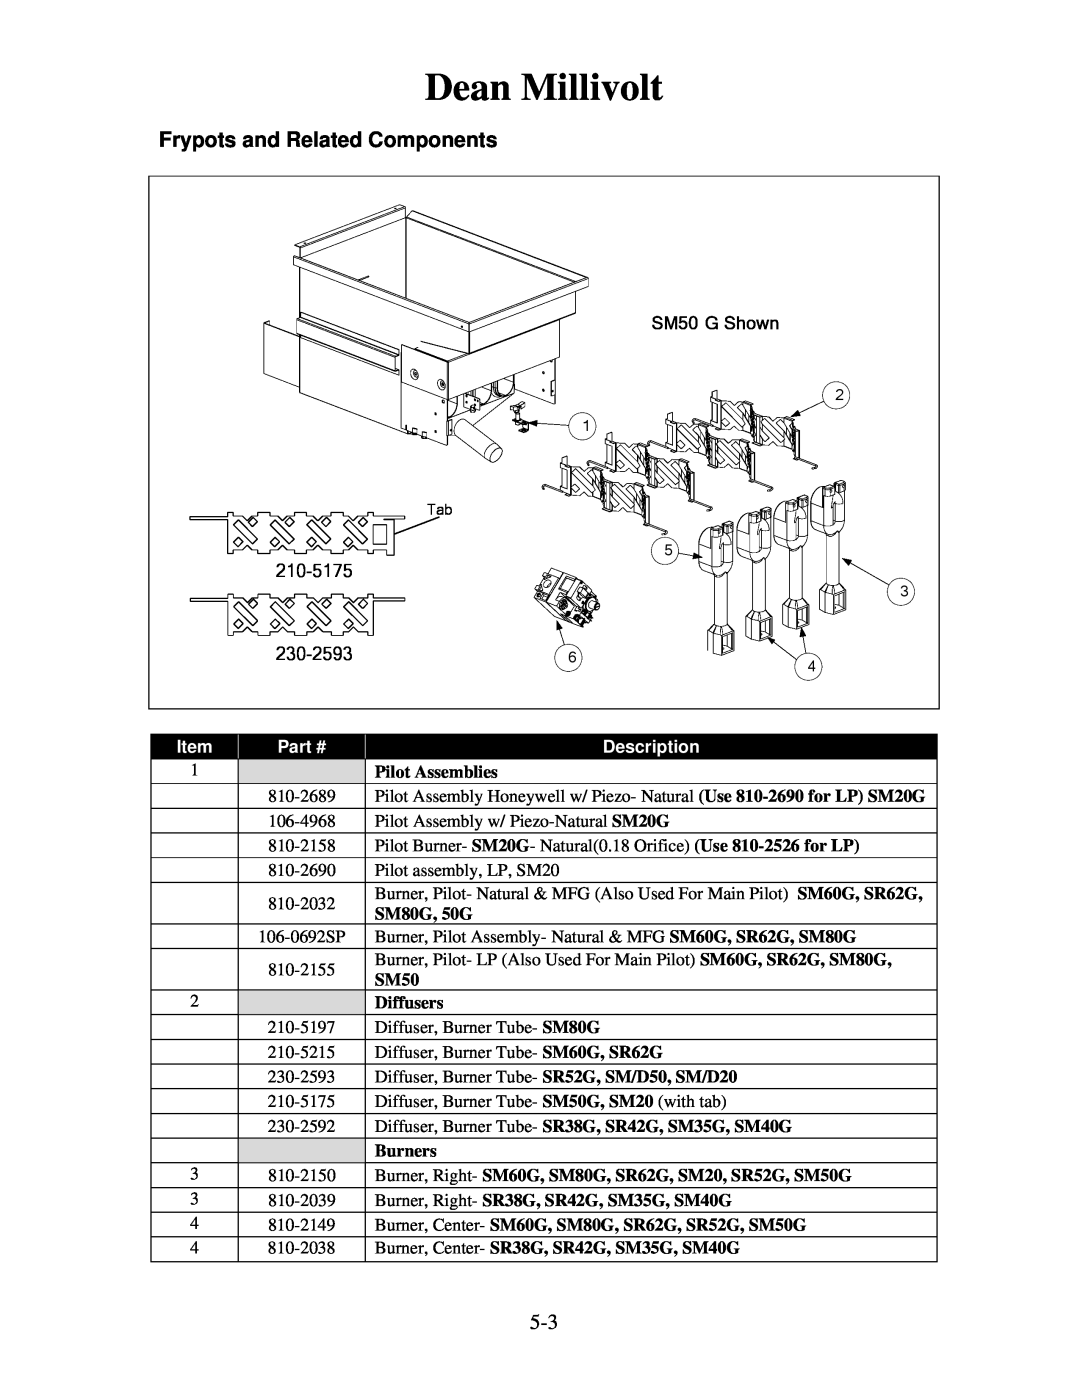 Frymaster 8196321 manual Dean Millivolt, Description, Pilot Assemblies, SM80G, 50G, SM50, Diffusers, Burners 